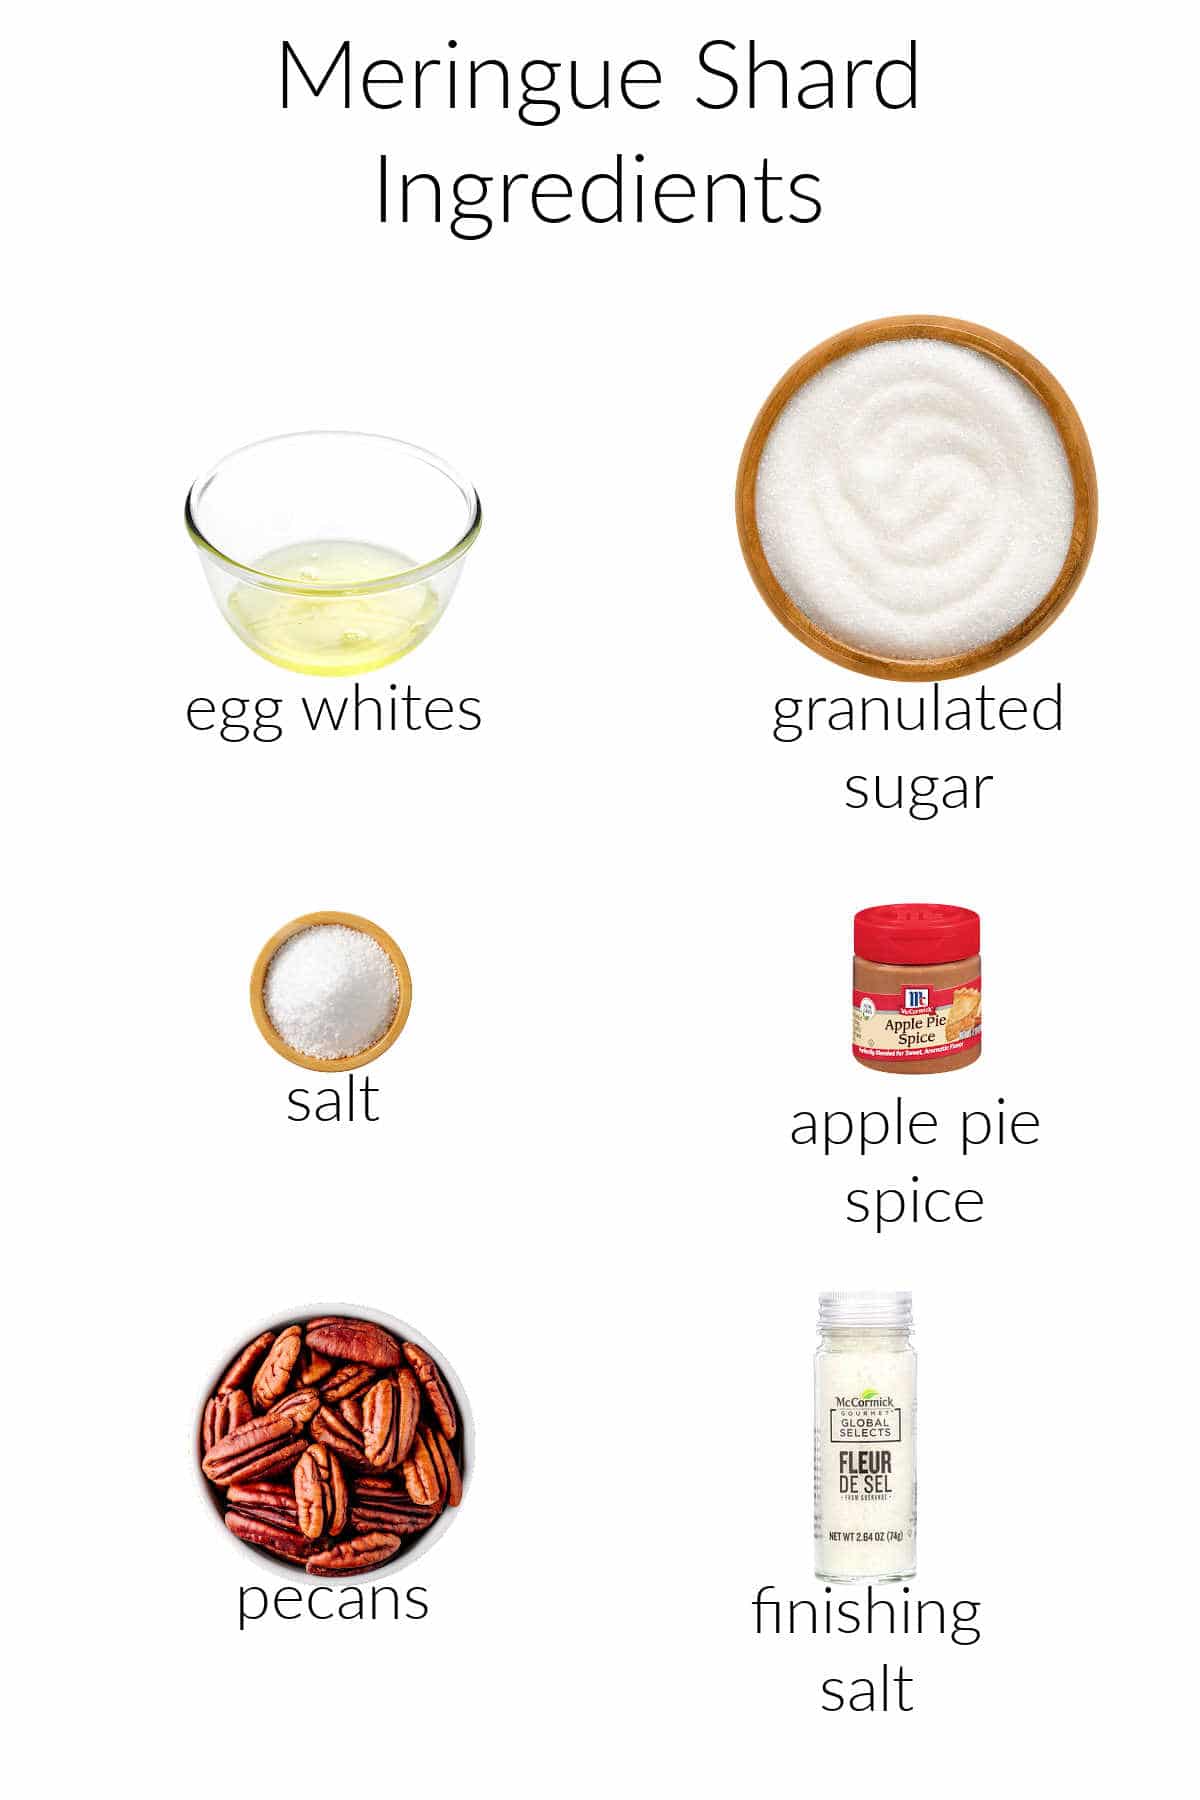 Ingredients for making meringue shards on a white background: egg white, sugar, salt, apple pie spice, pecans, and finishing salt.